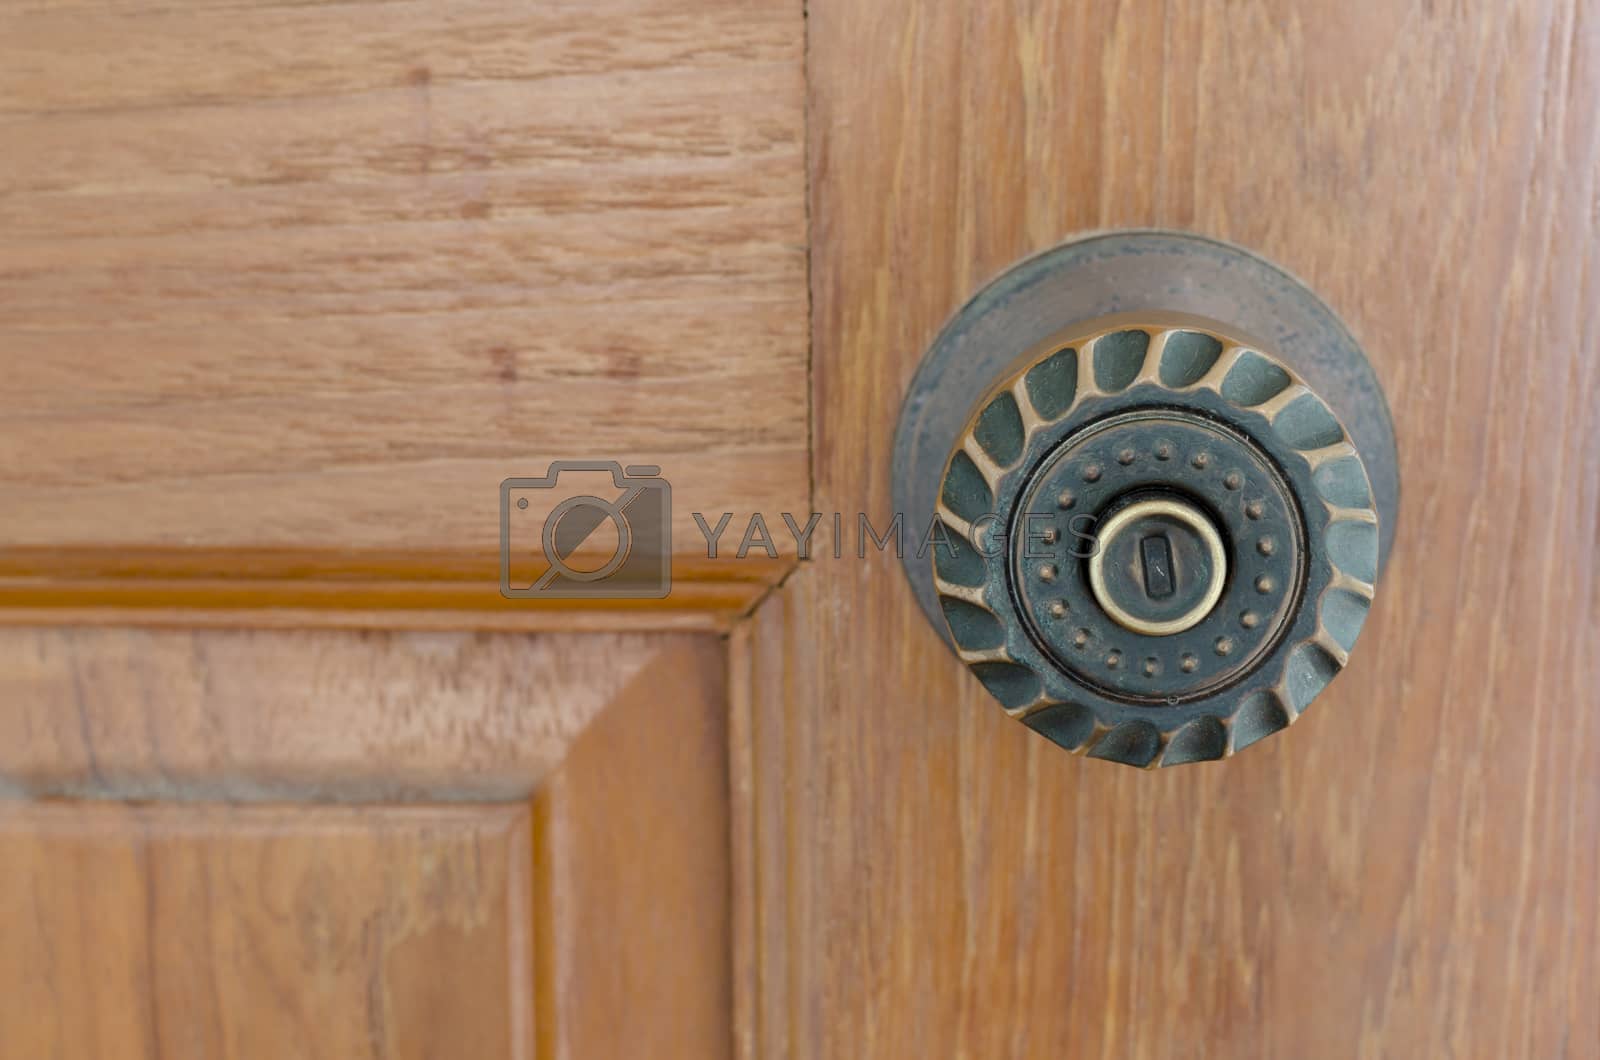 Royalty free image of door knob and key hole by ammza12